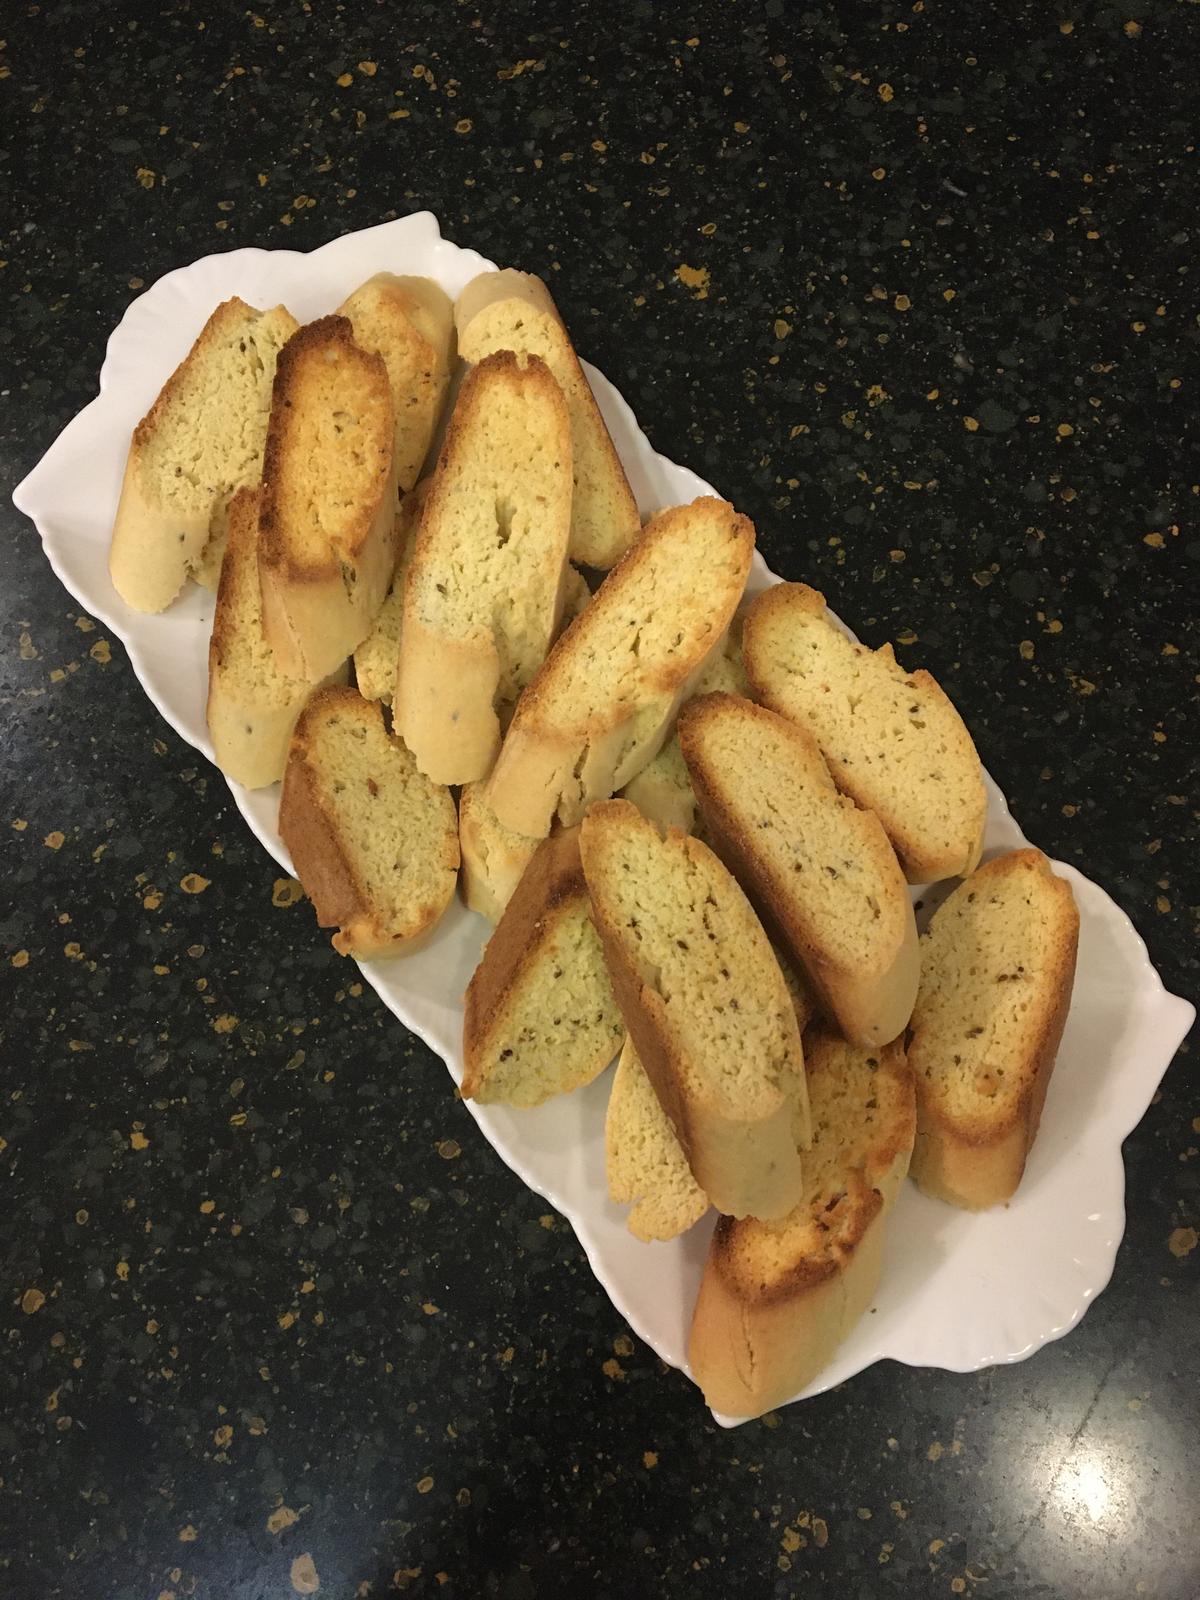 Homemade biscotti. (Courtesy of Laura Semenza-Marcos)